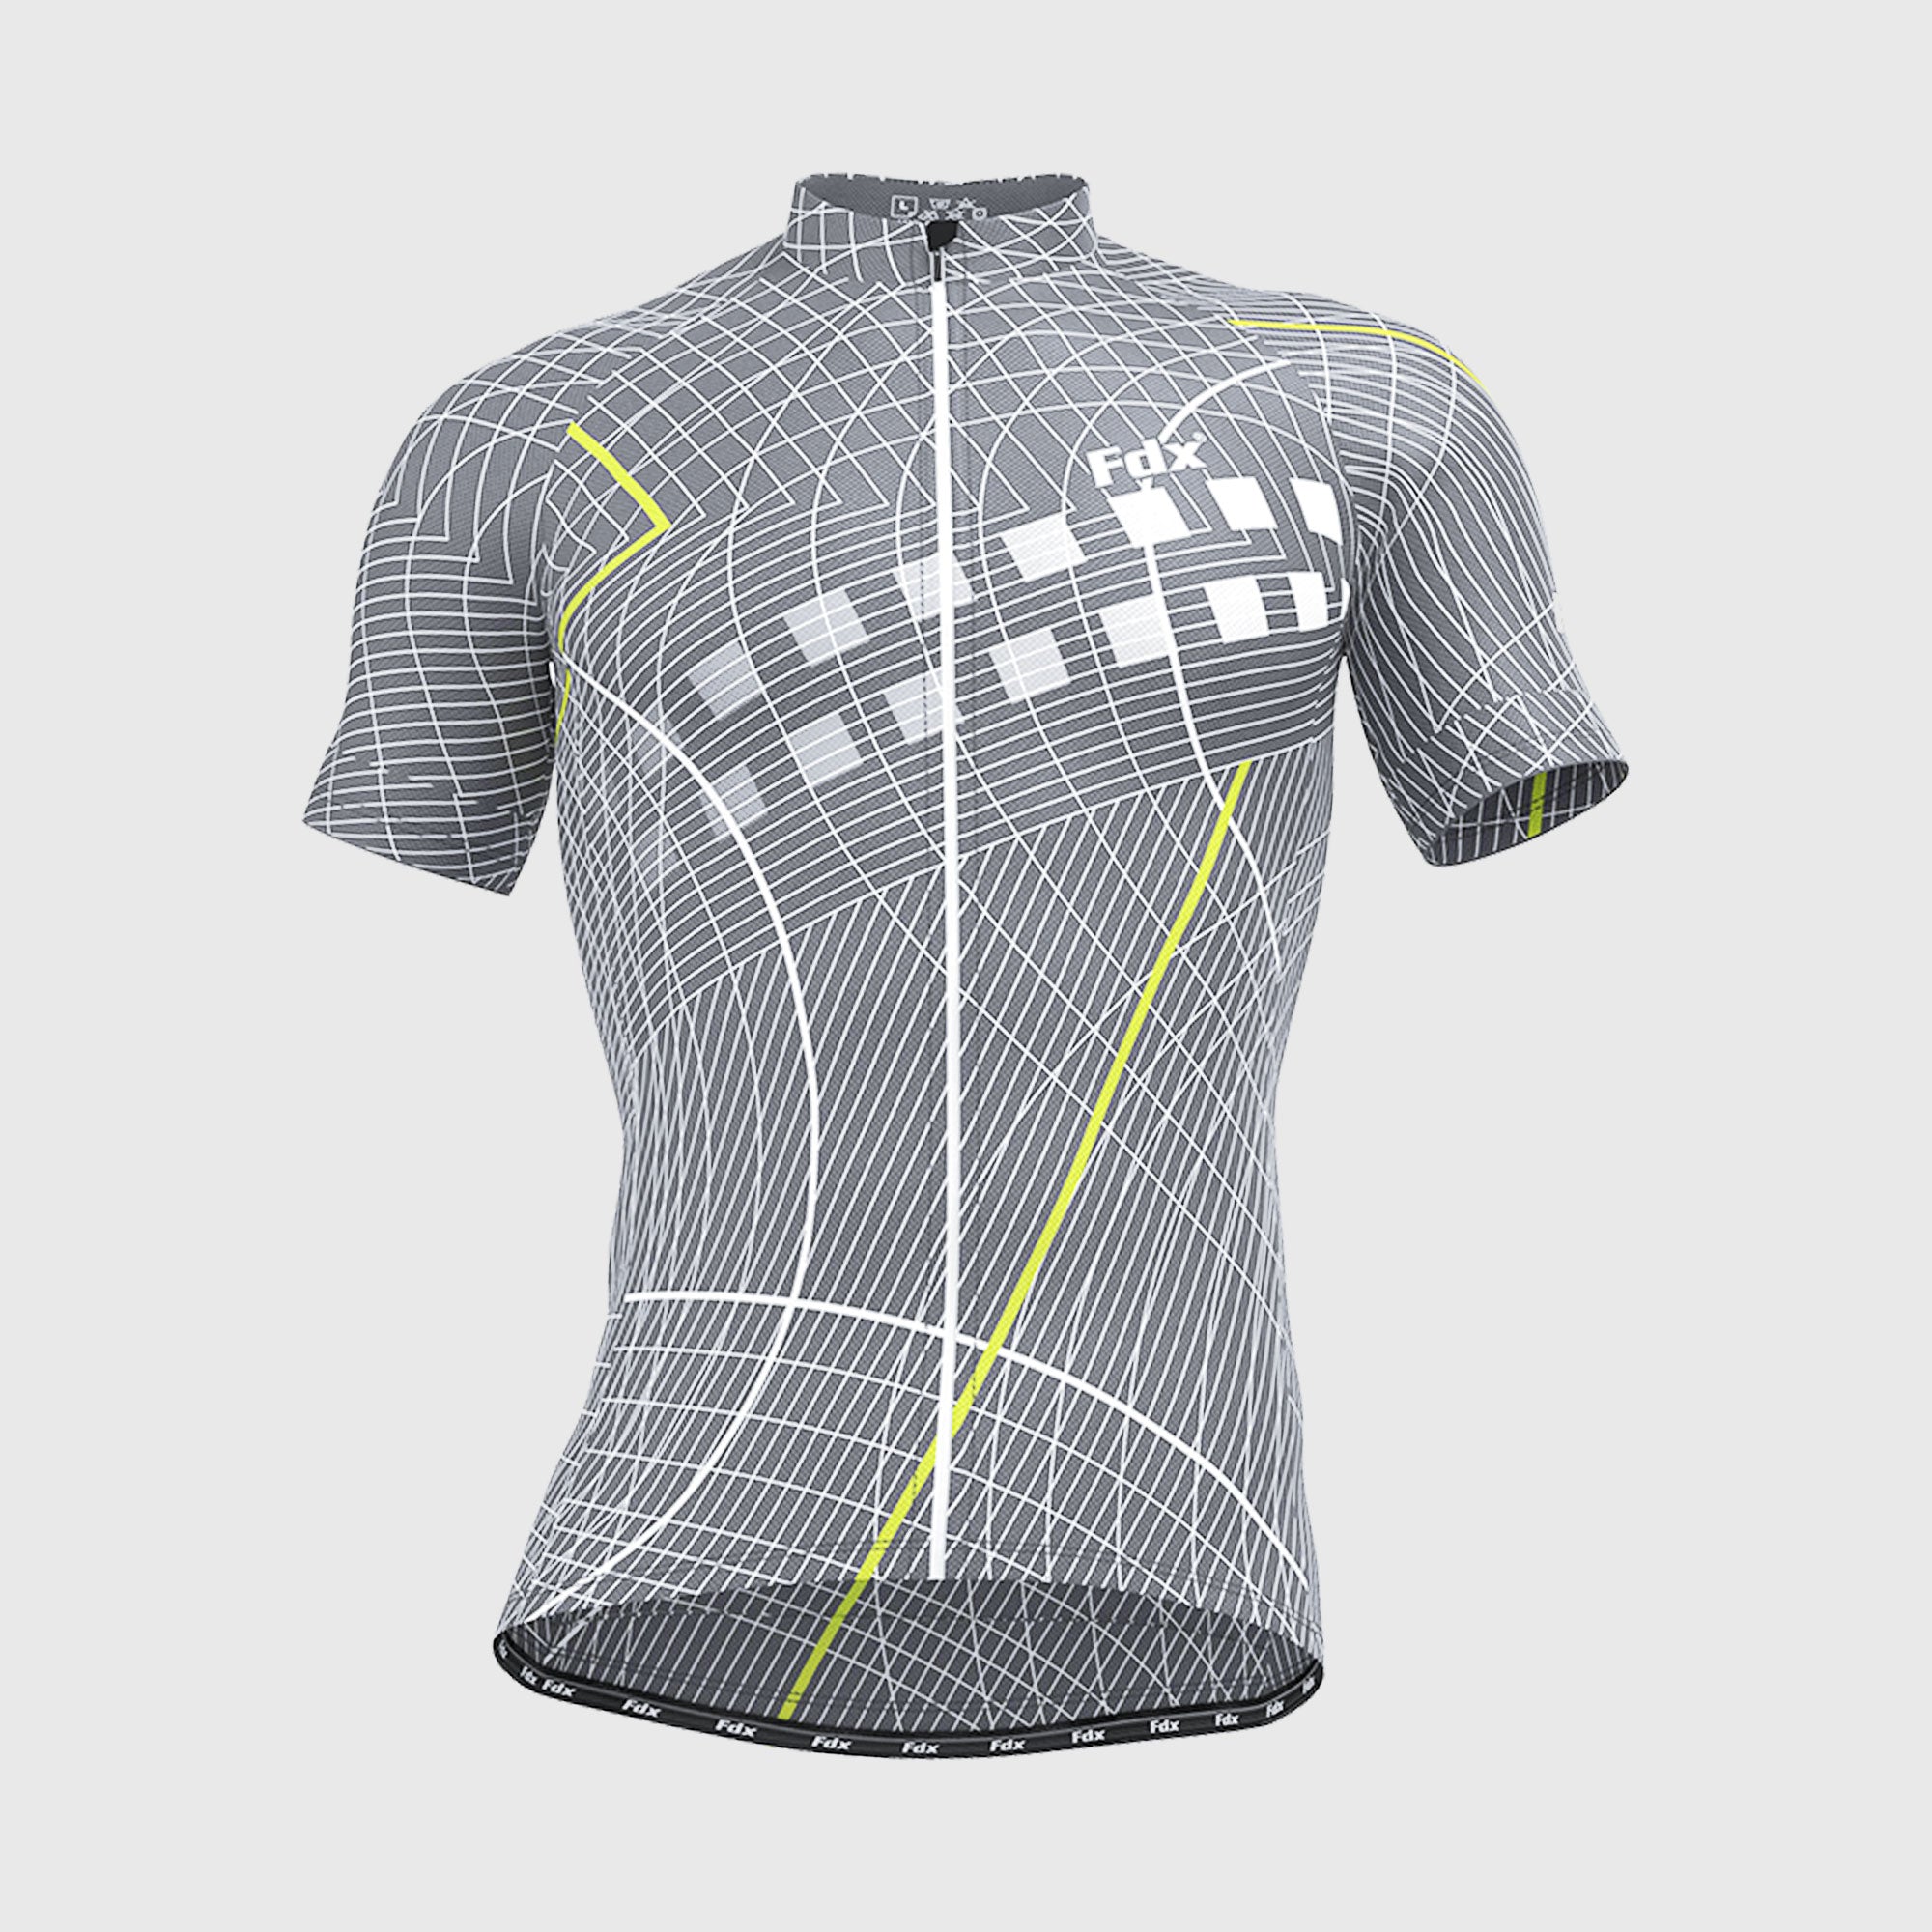 Fdx Mens Grey Short Sleeve Cycling Jersey for Summer Best Road Bike Wear Top Light Weight, Full Zipper, Pockets & Hi-viz Reflectors - Classic II